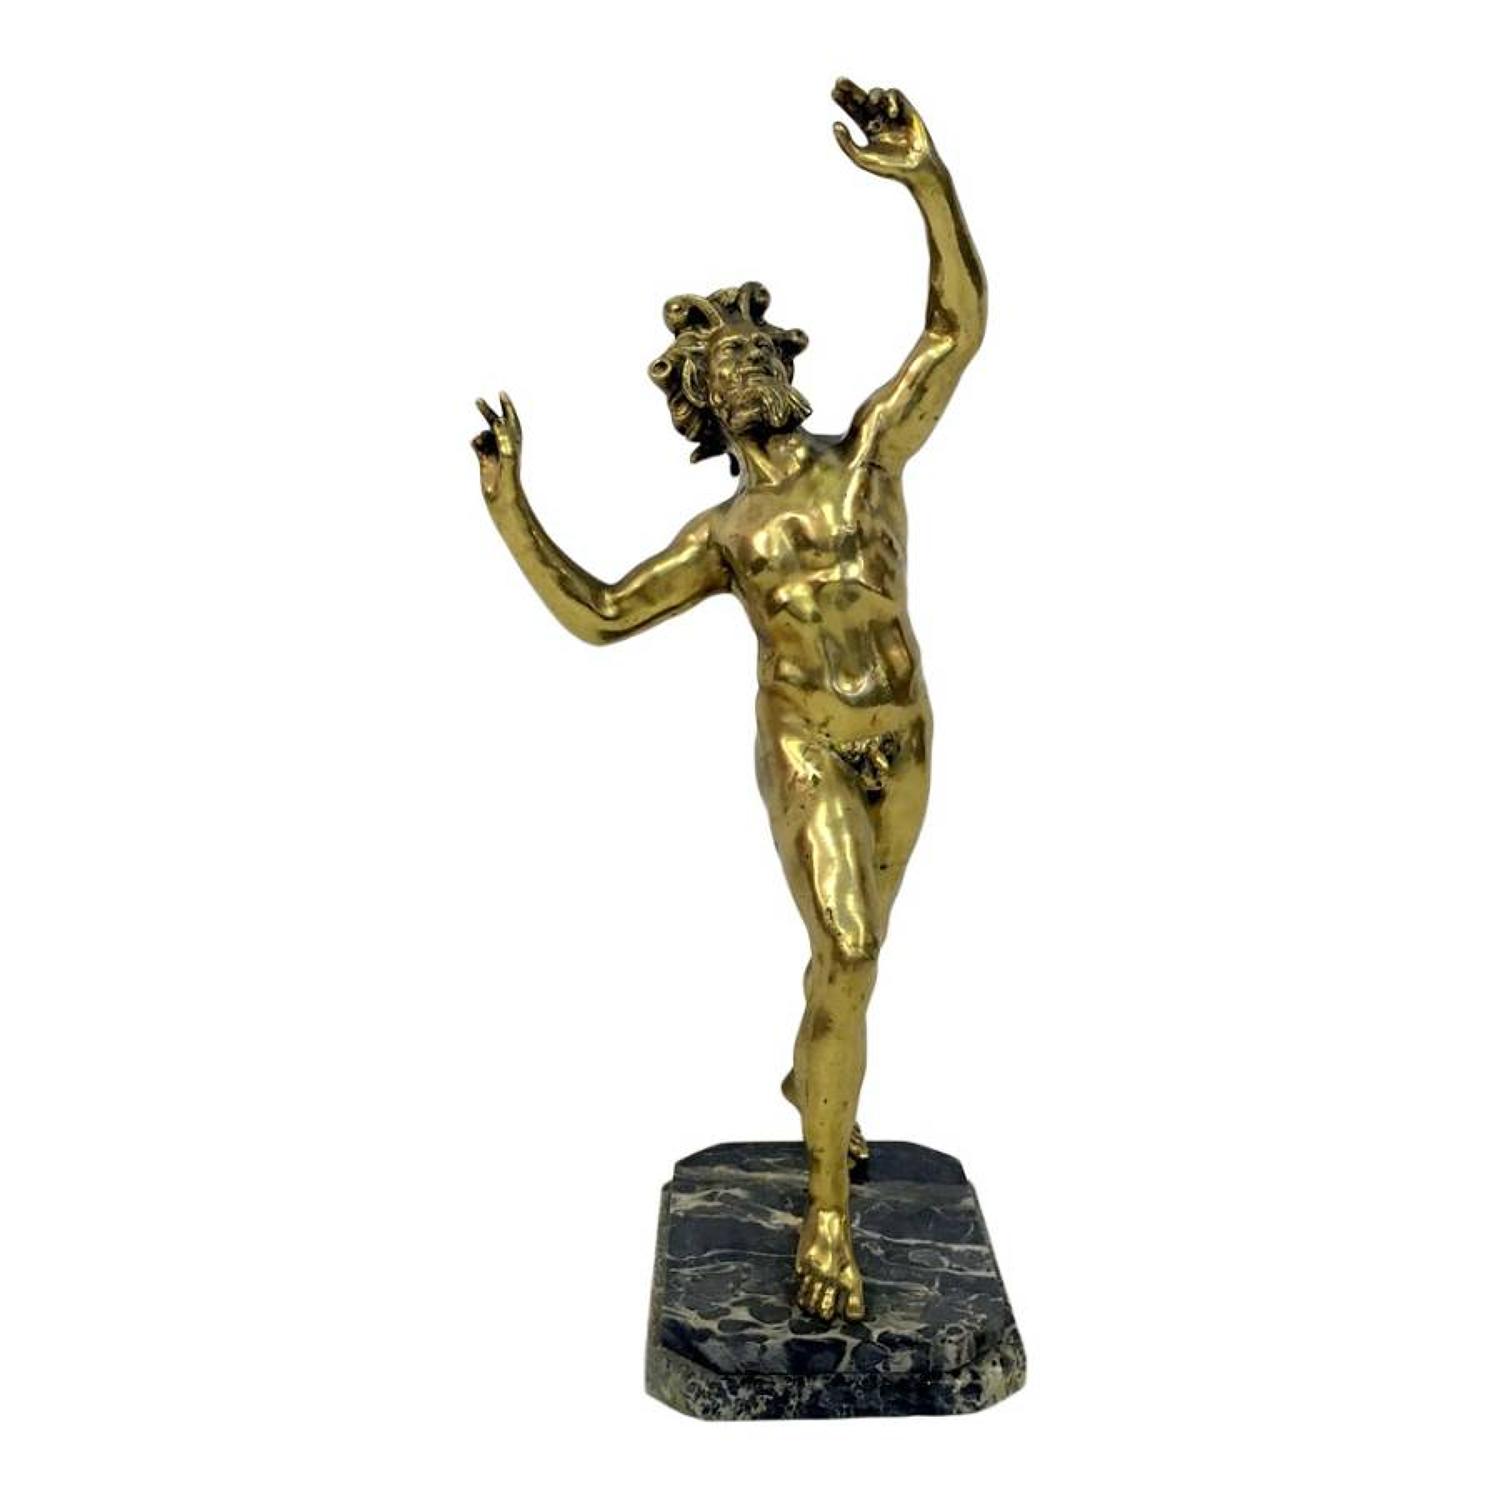 Gilt bronze figure of the Dancing Faun of Pompeii